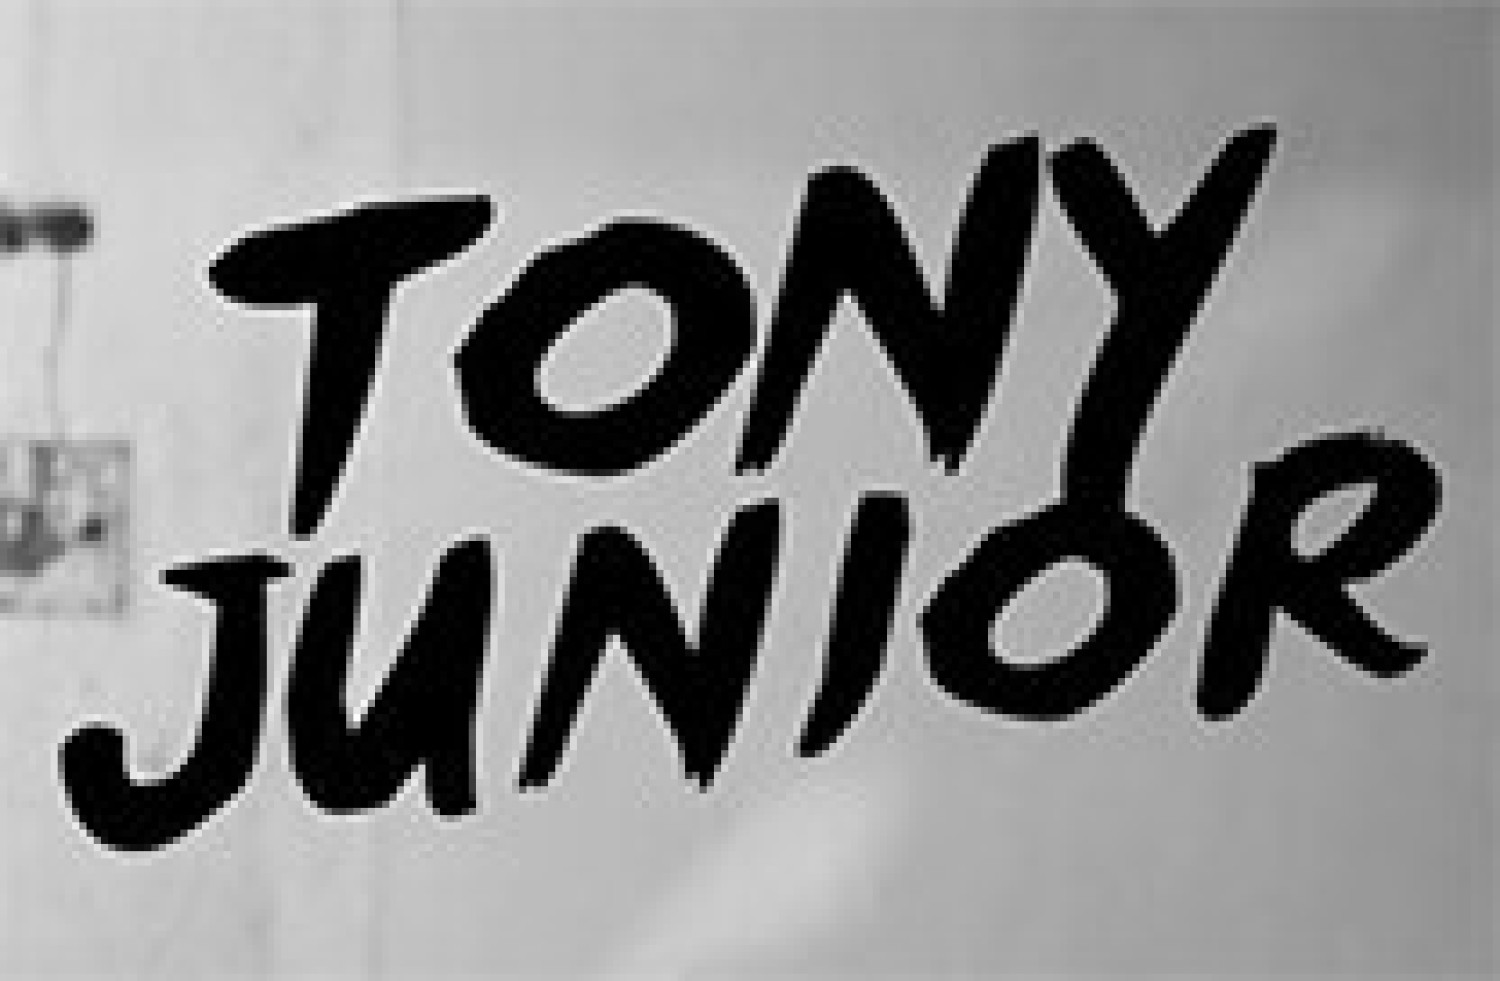 Interview: Tony Junior